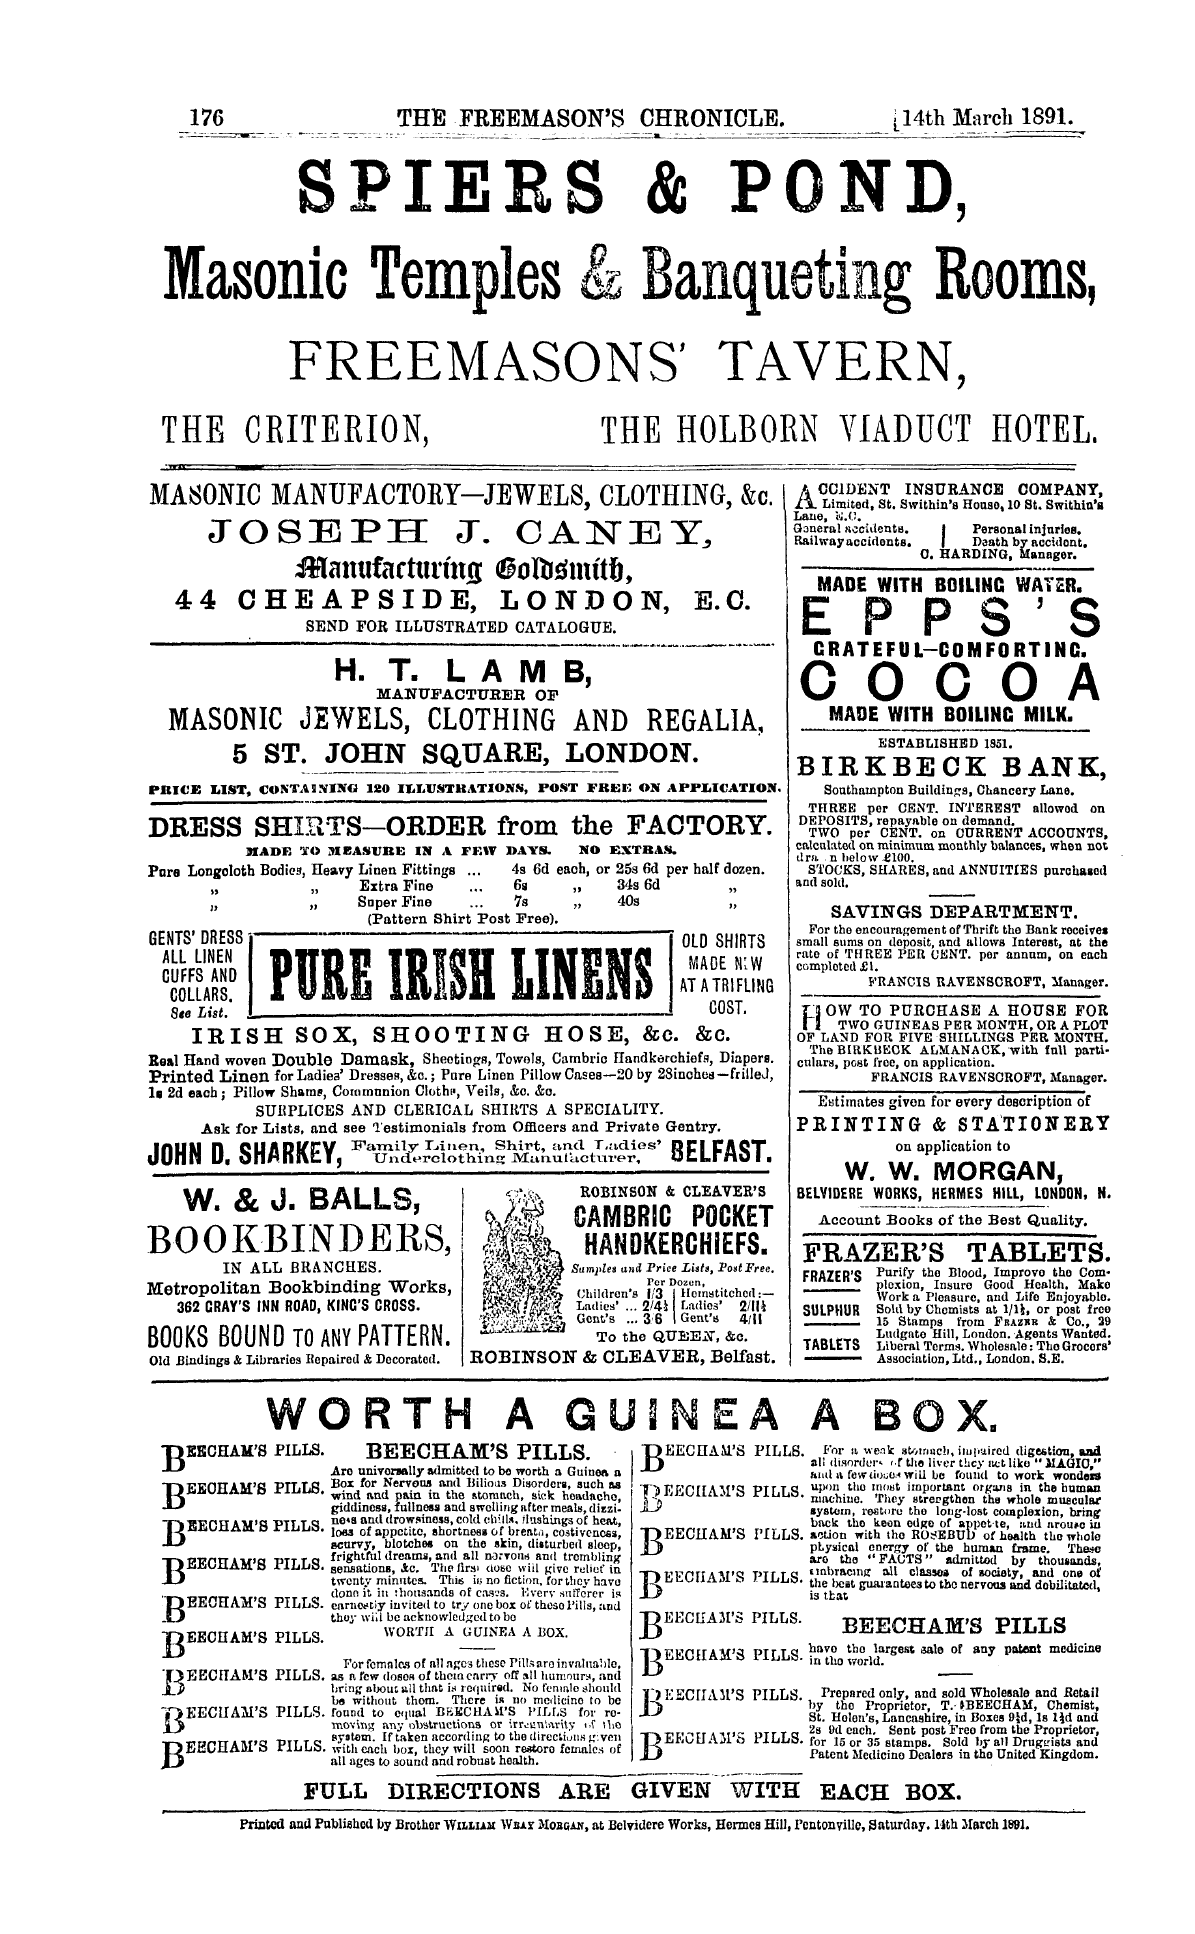 The Freemason's Chronicle: 1891-03-14 - Ad01610